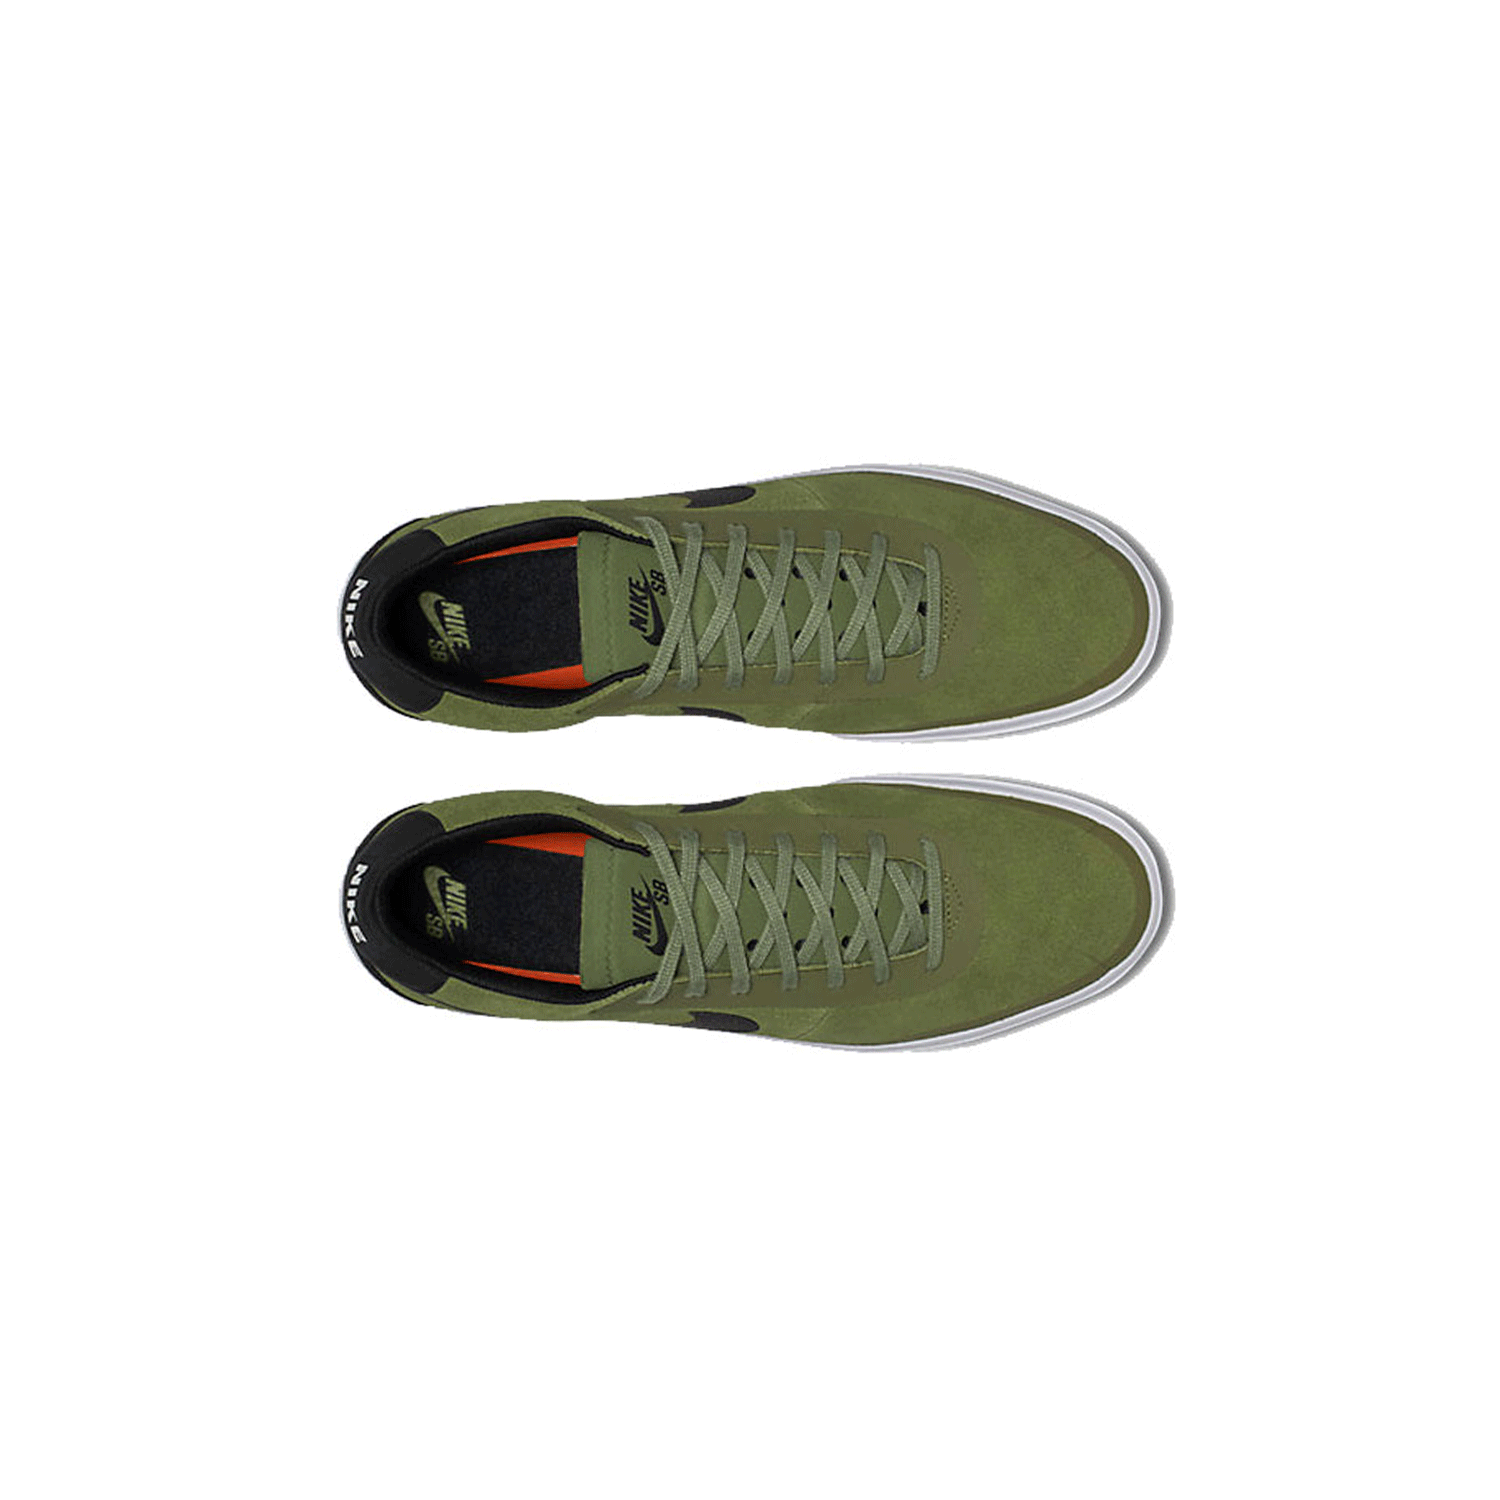 Nike SB - Bruin Hyperfeel - Palm Green/Black-White SALE